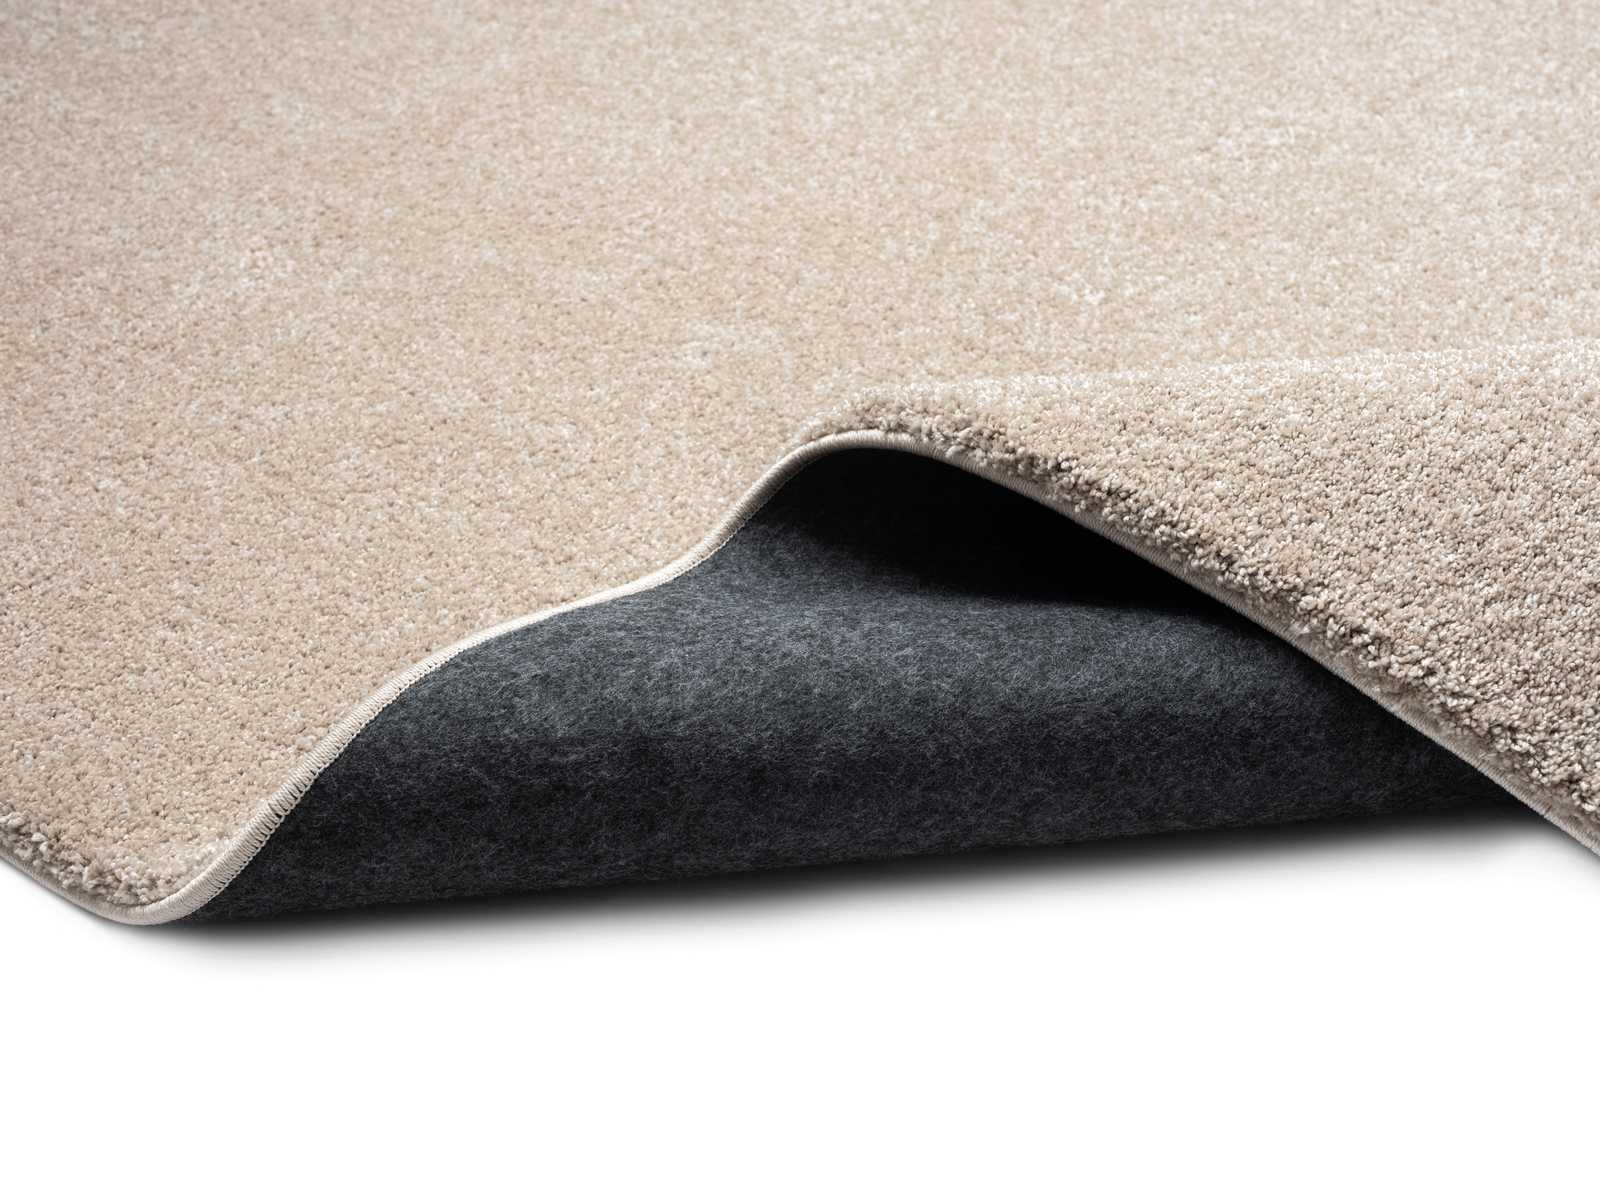             Soft short pile carpet in beige - 110 x 60 cm
        